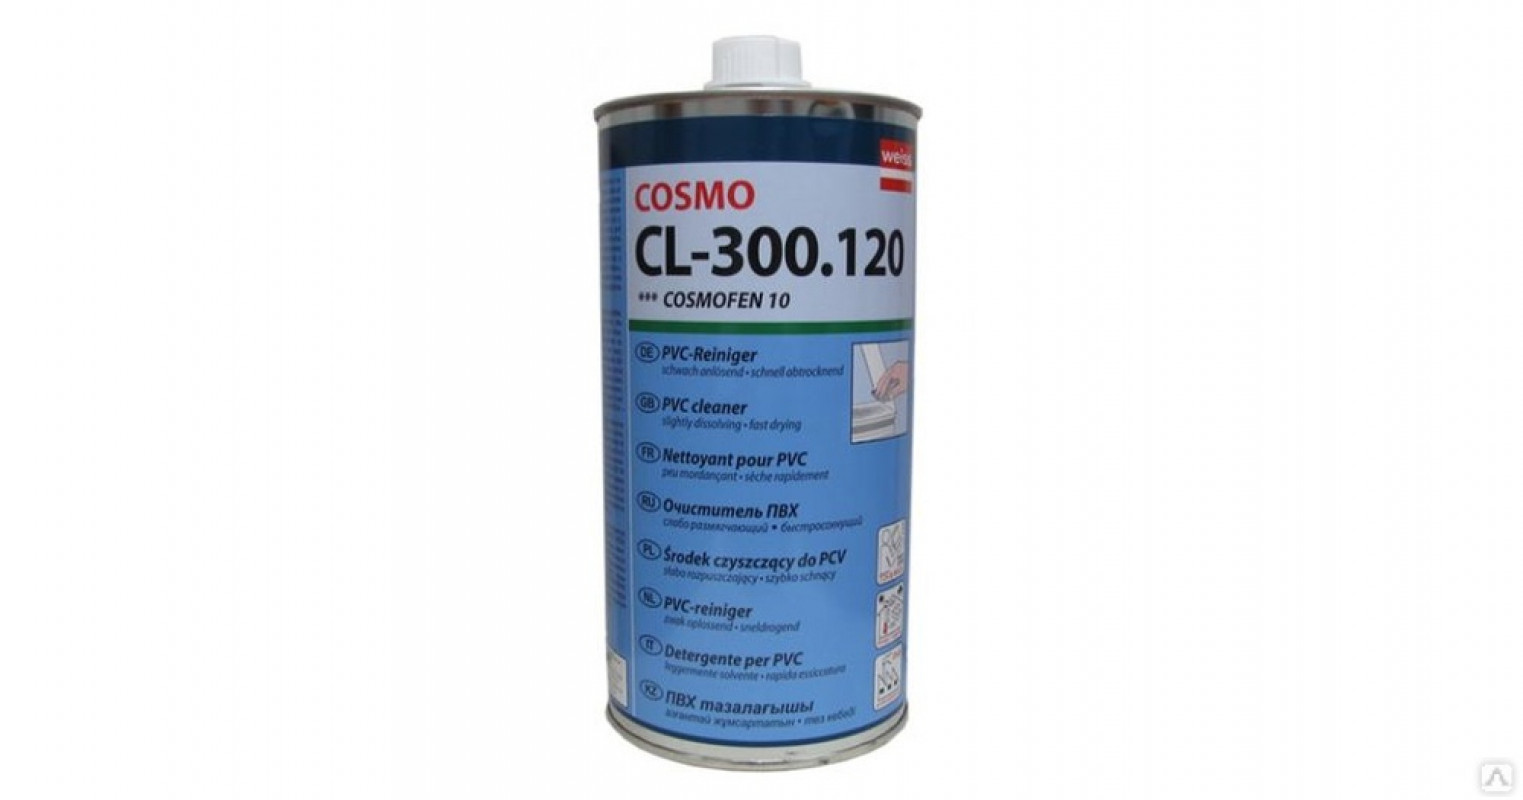 Космофен 5. Cosmofen 10 очиститель. Очиститель Cosmofen 60, 1000 мл. Очиститель Cosmofen 10, 1 л. Cosmo CL-300.120 Cosmofen 20.